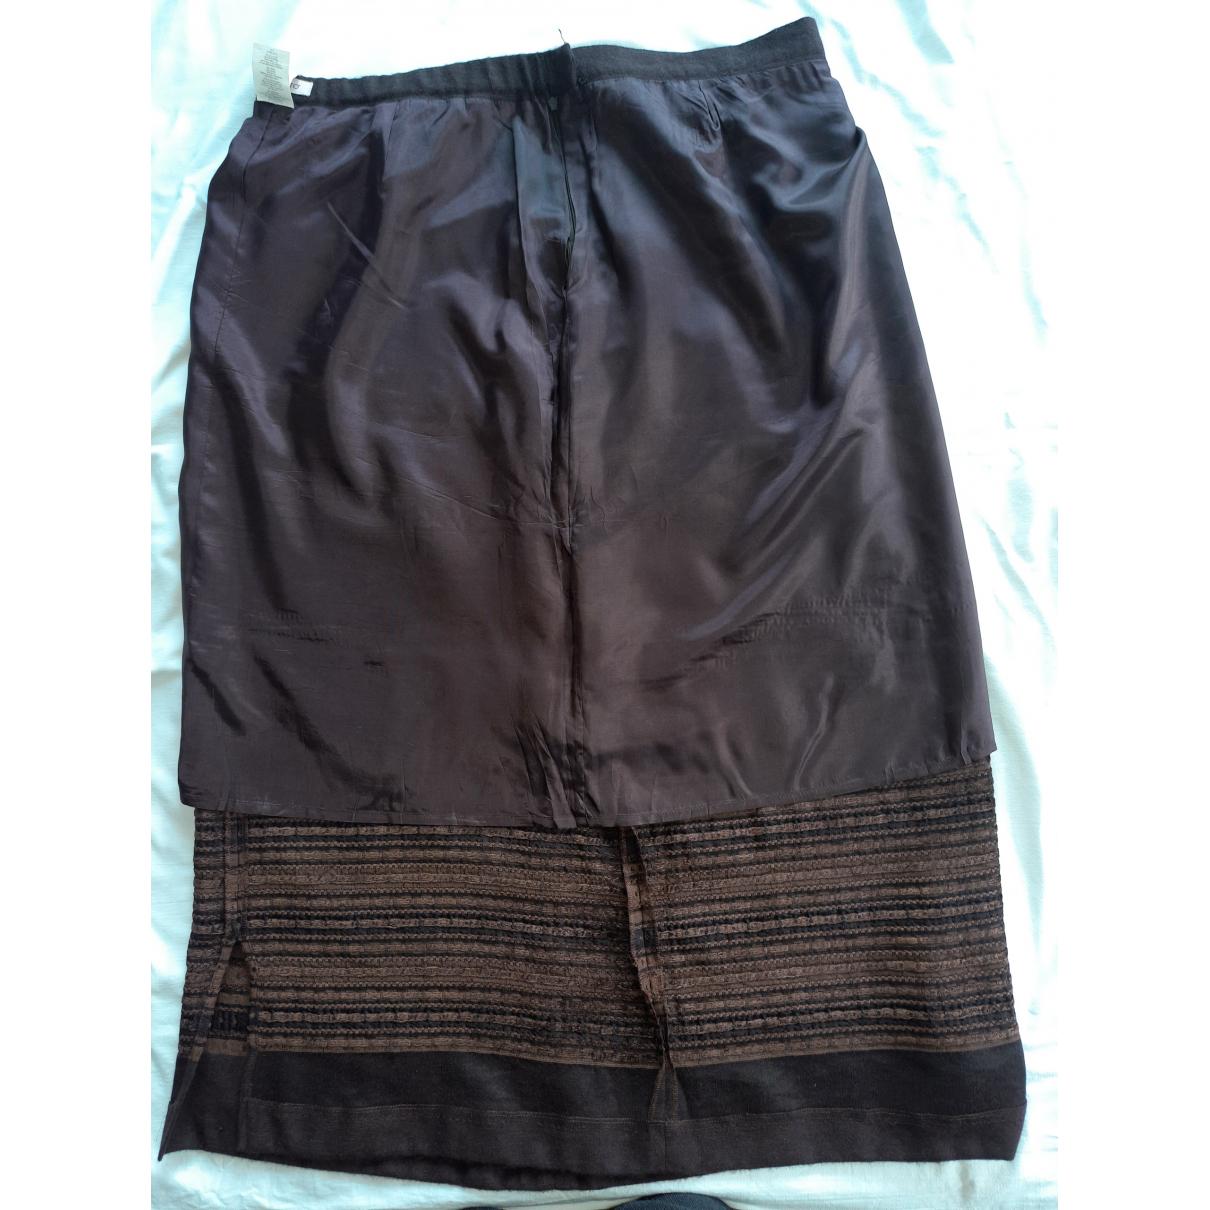 Buy Elena Miro Maxi skirt online